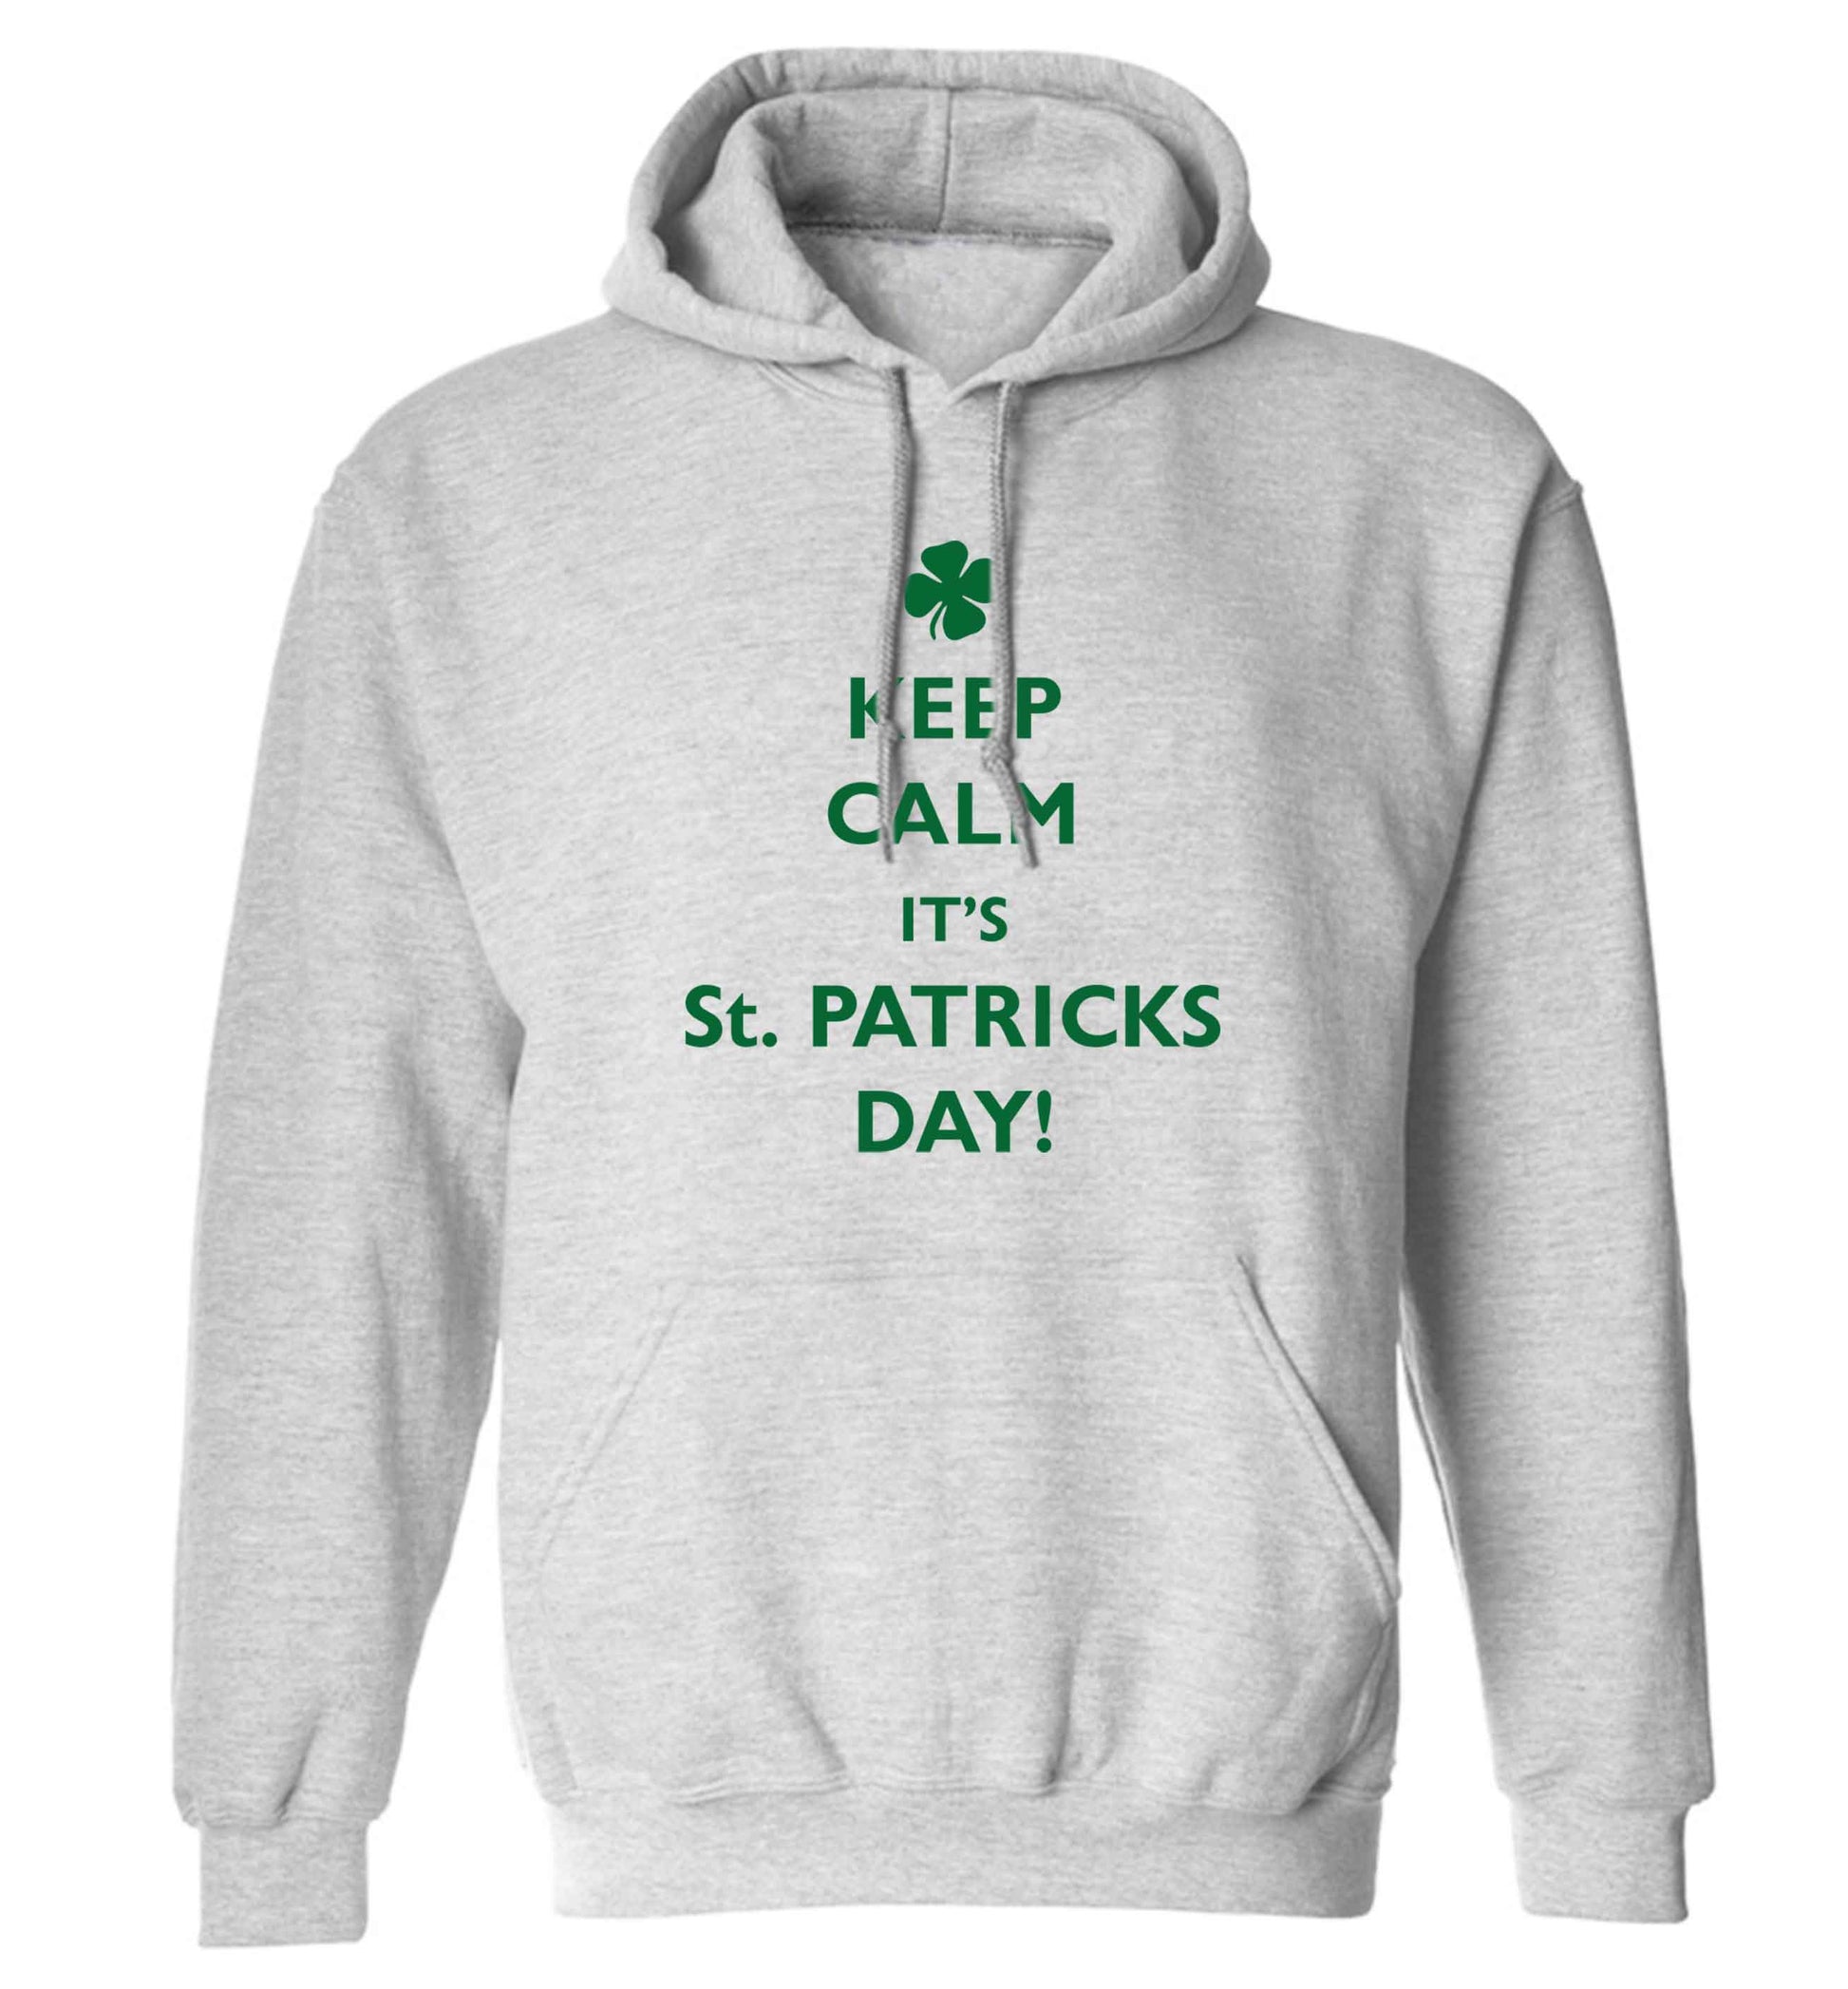 Keep calm it's St.Patricks day adults unisex grey hoodie 2XL